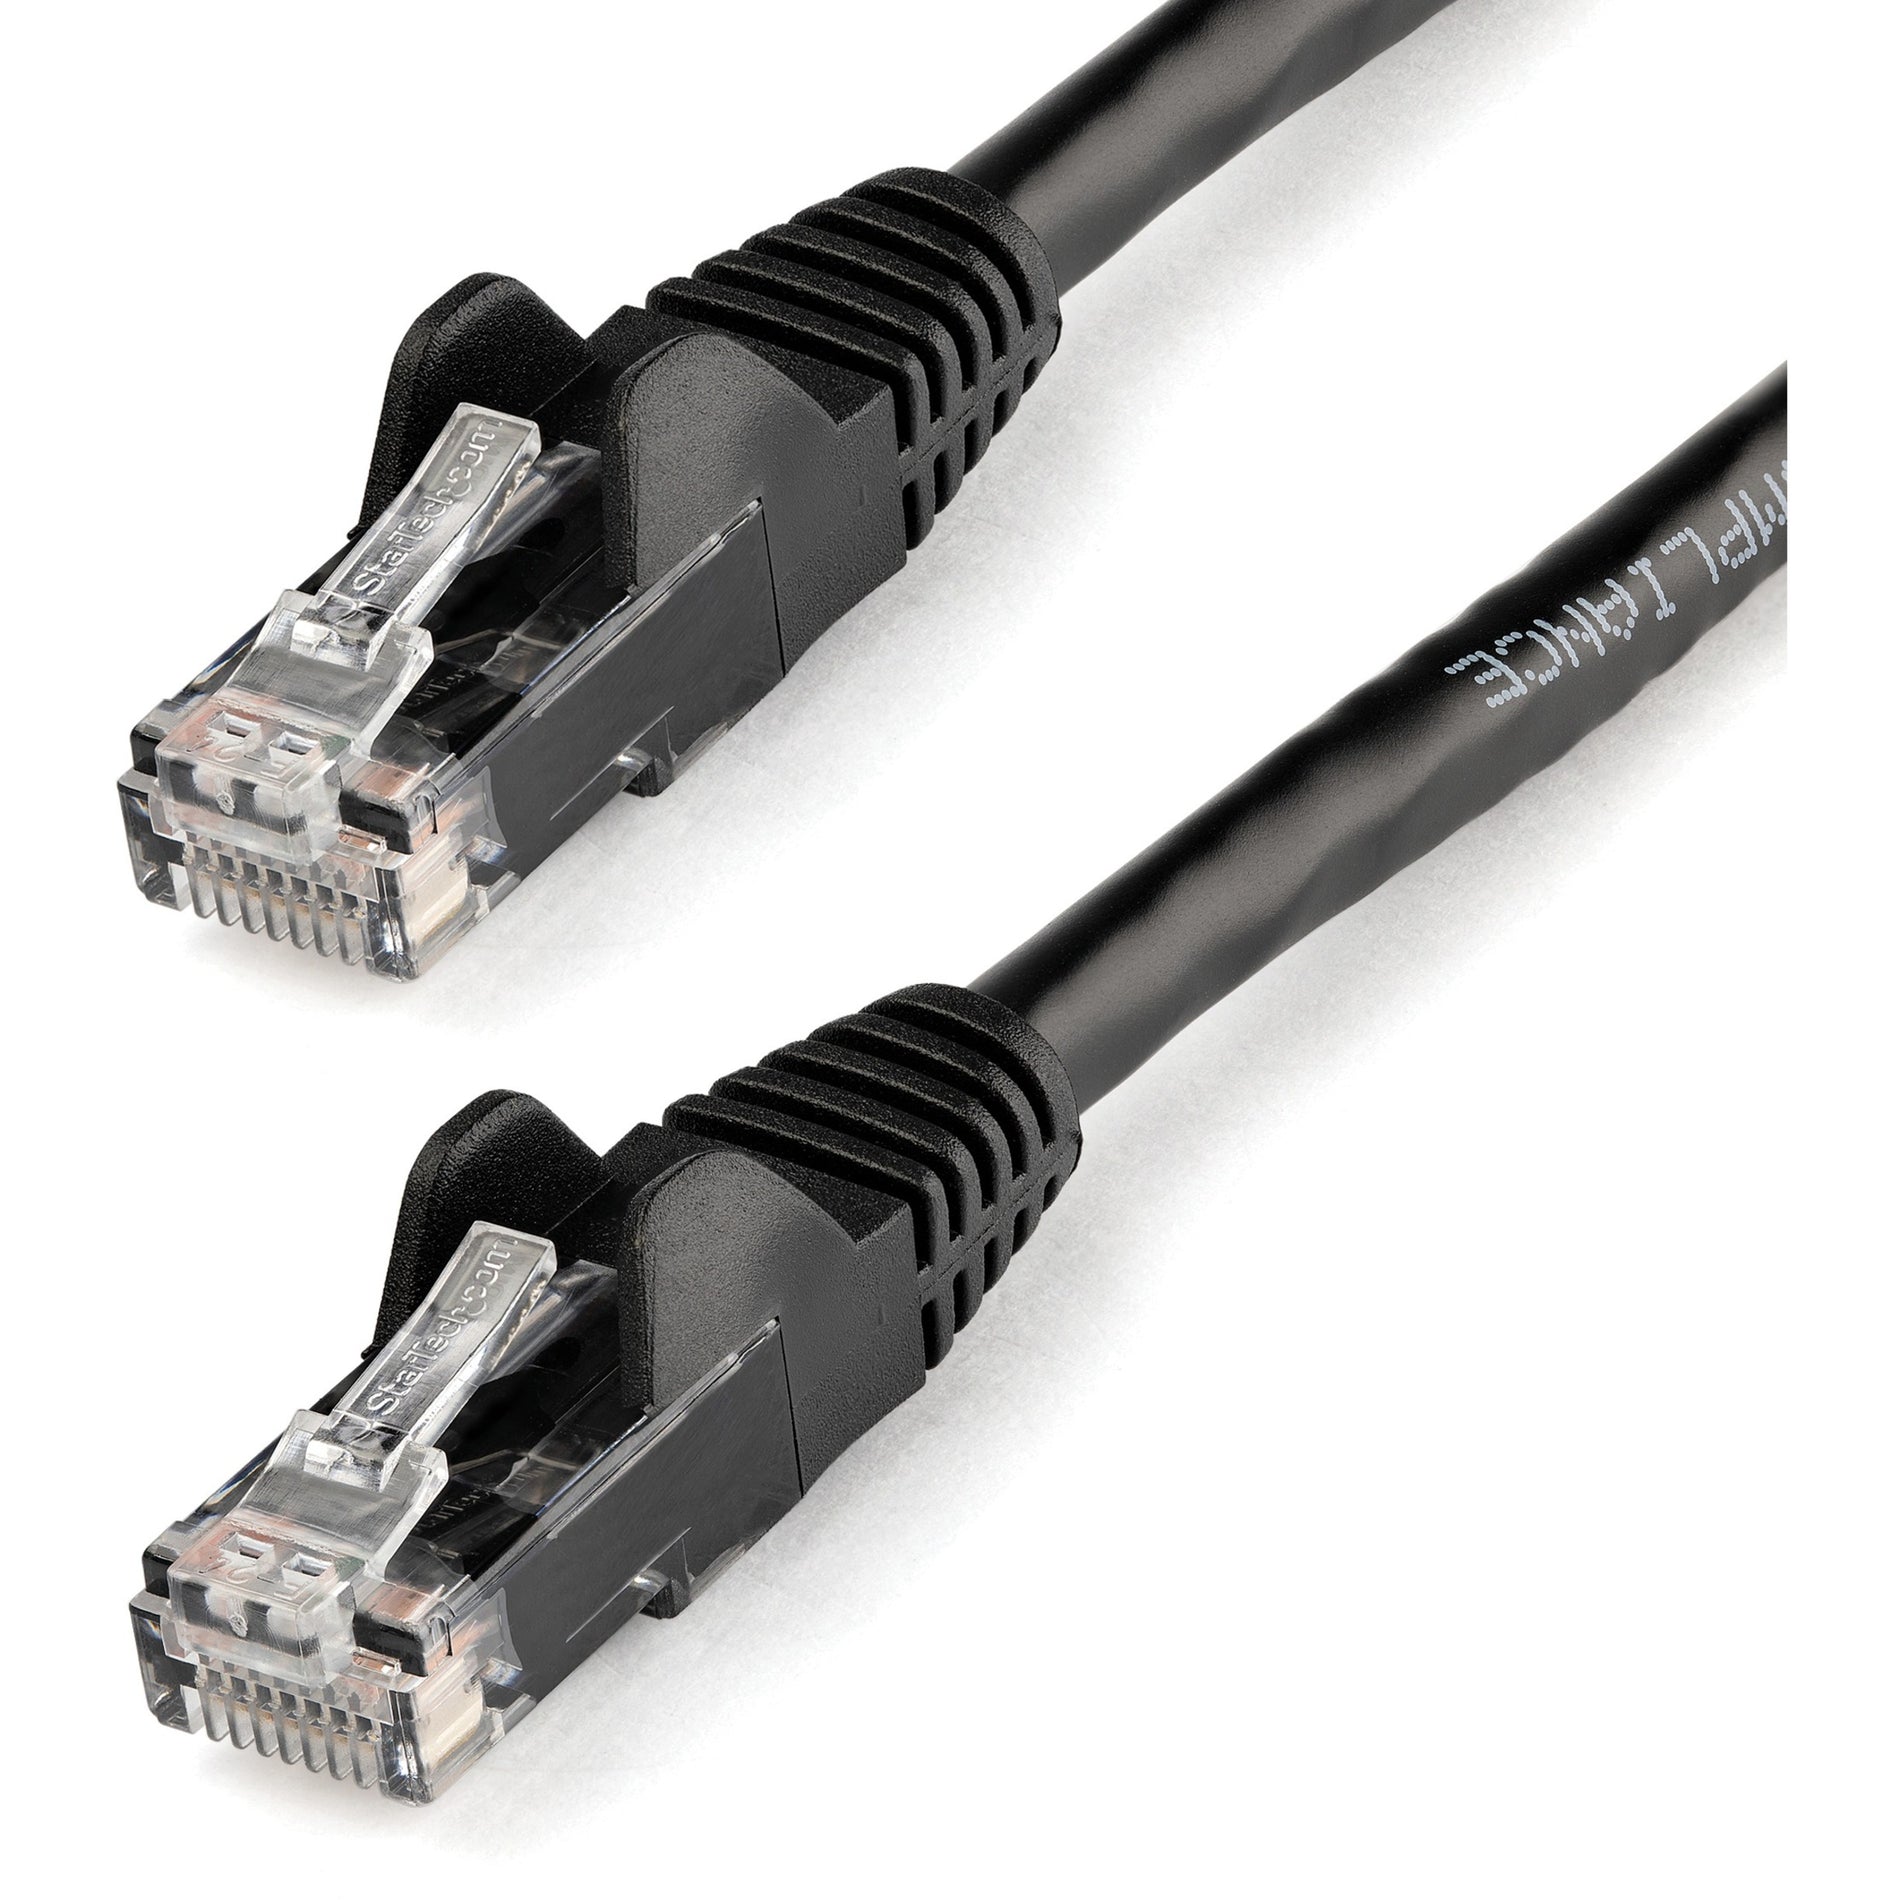 StarTech.com N6PATCH50BK 50 ft Black Snagless Cat6 UTP Patch Cable, Lifetime Warranty, 10 Gbit/s Data Transfer Rate, RJ45 Connector Clip Protectors